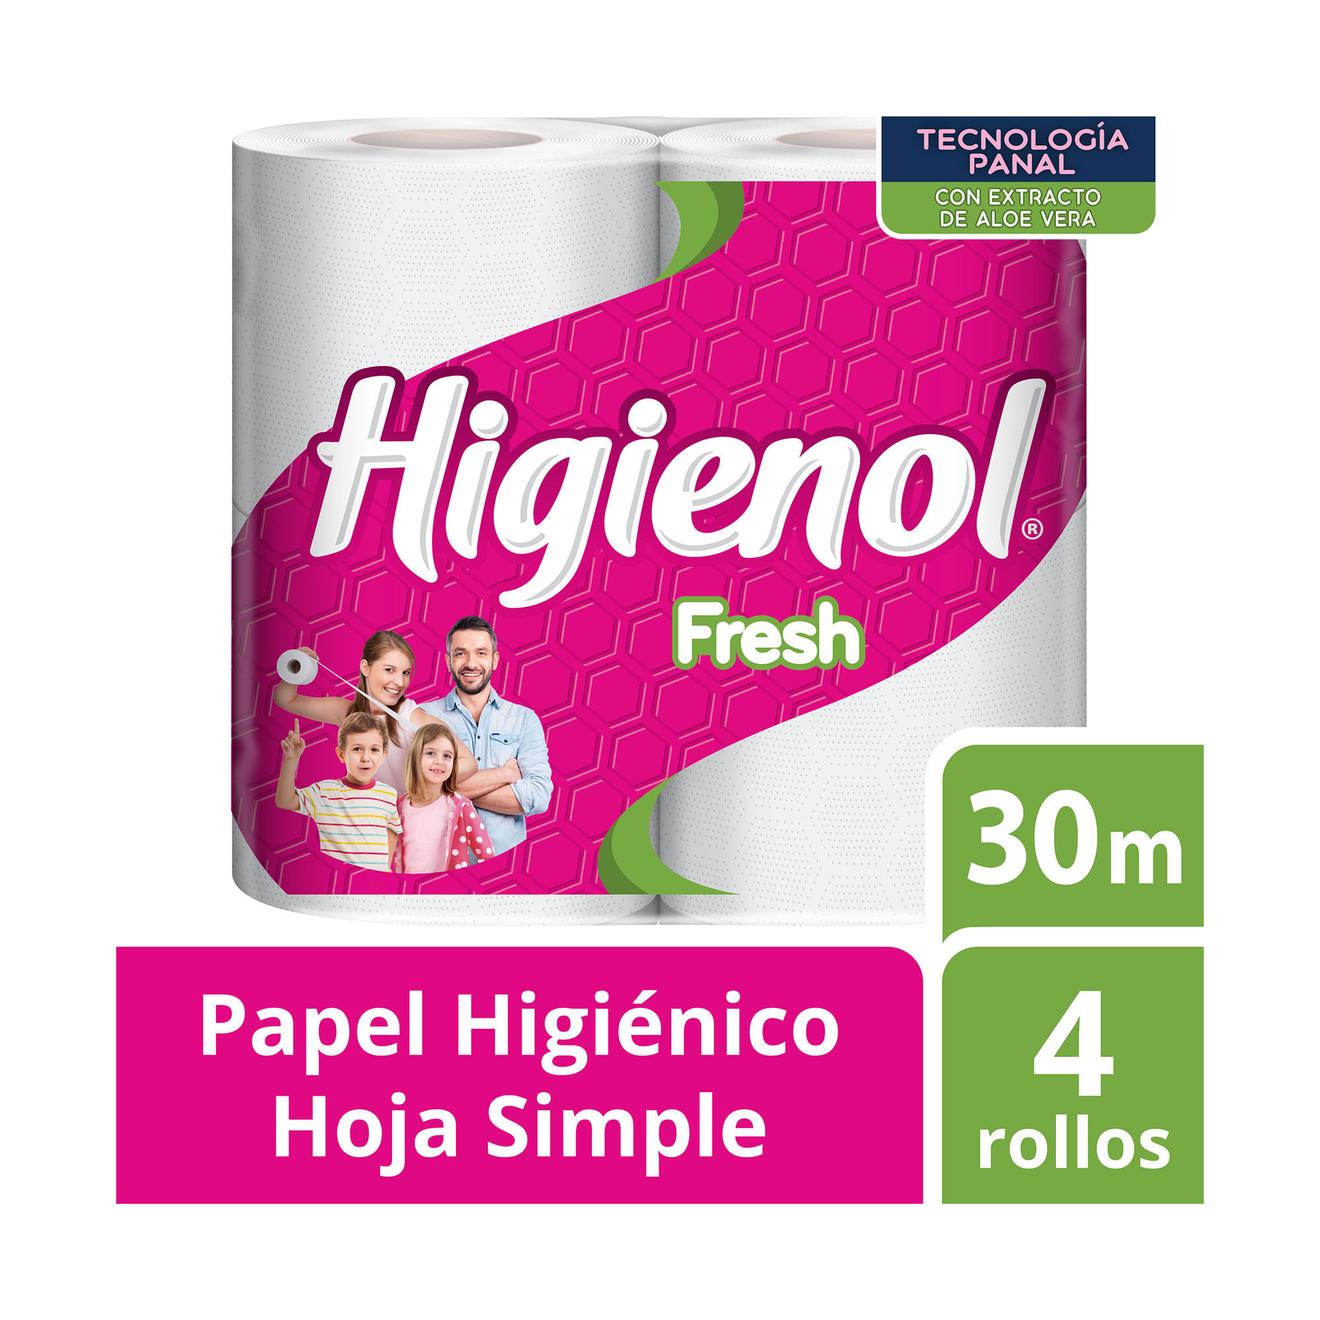 Oferta de Papel higiénico Higienol hoja simple fresh aloe x4 30 mts. por $1295 en Carrefour